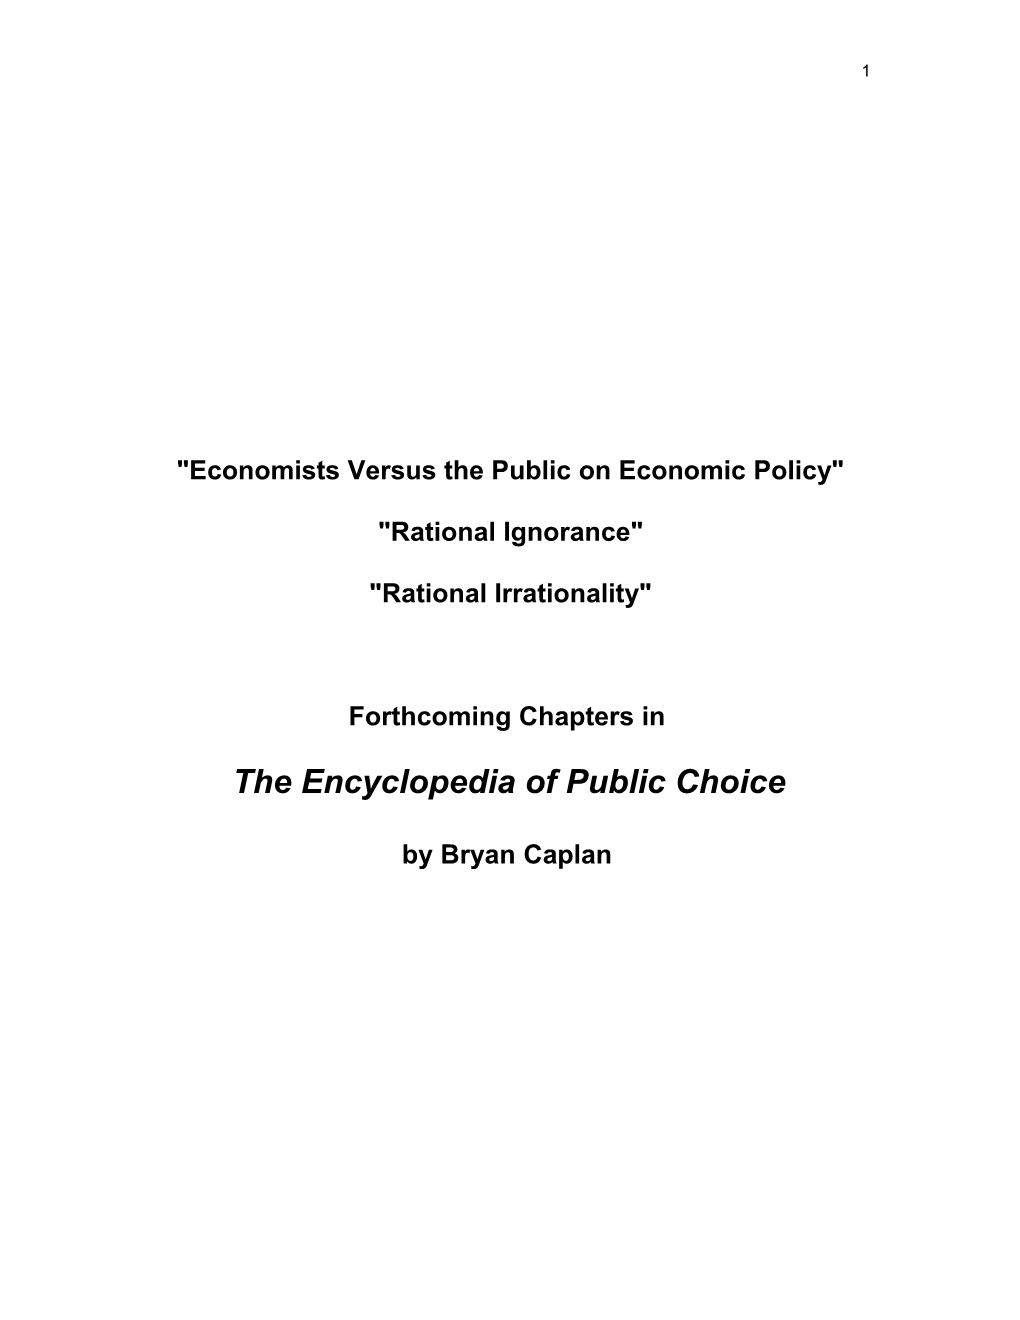 Economists Versus the Public on Economic Policy